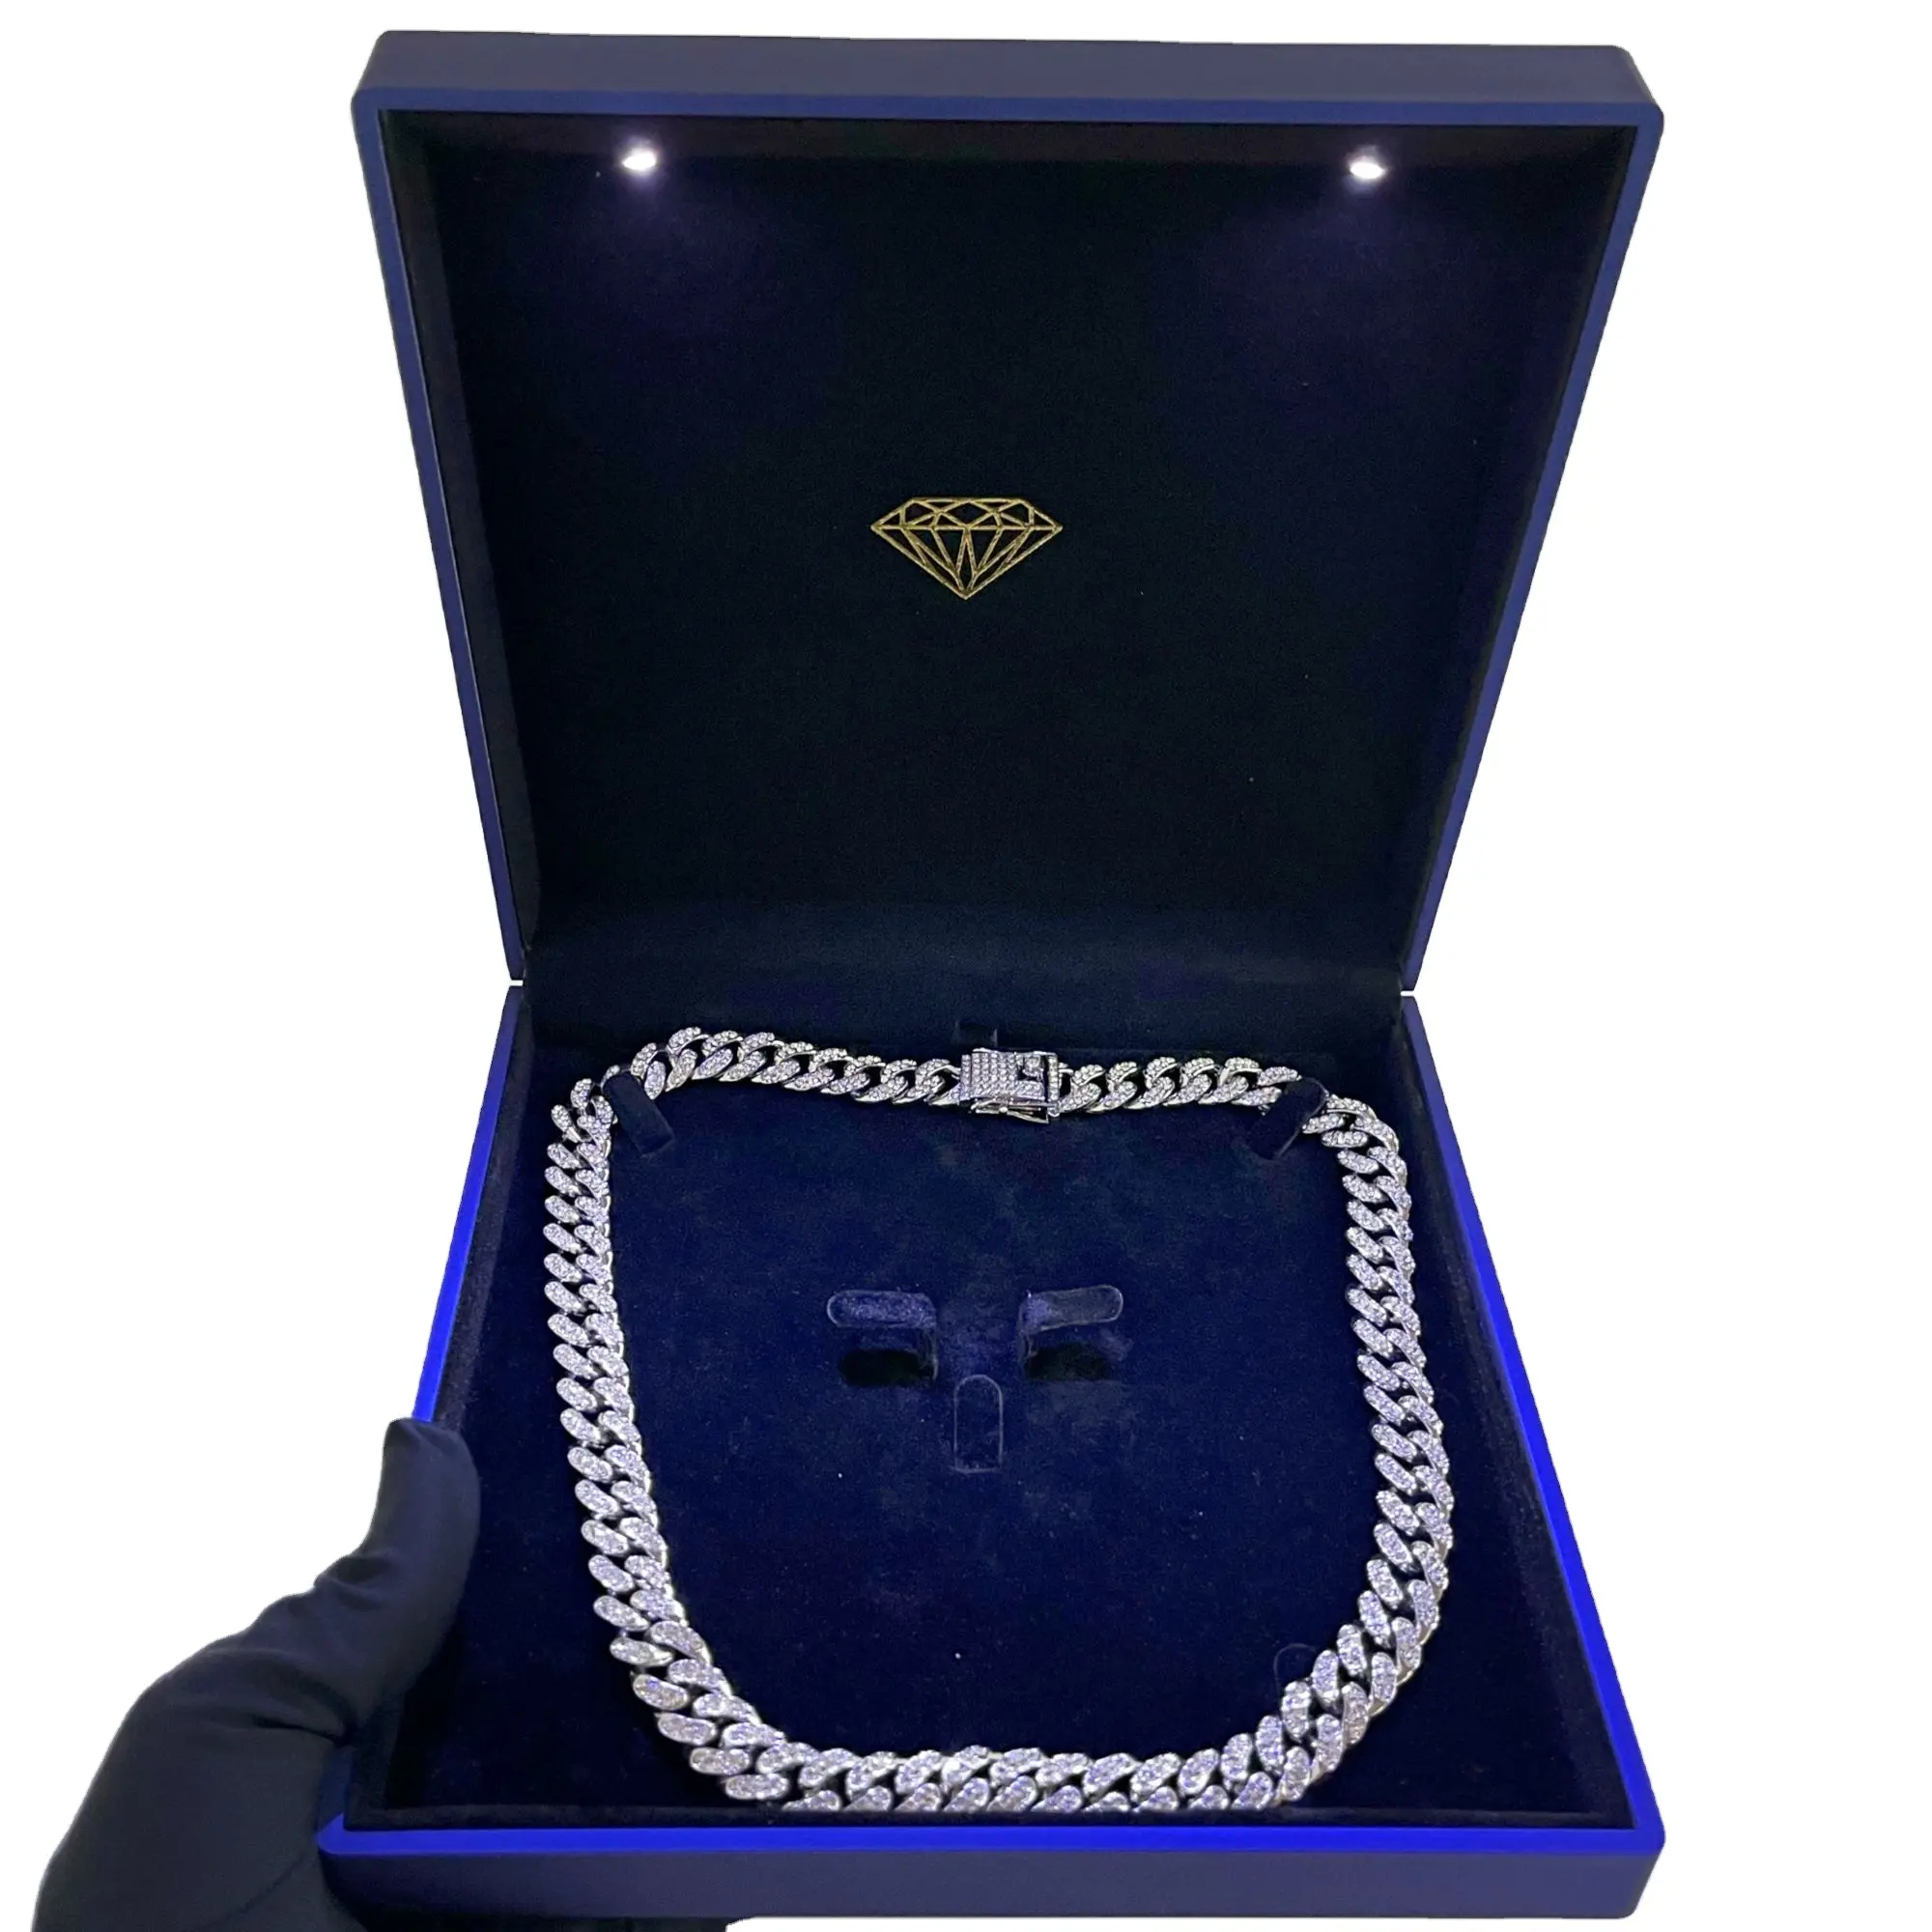 FORTE kustom logo perhiasan besar kalung gelang kemasan kotak dengan pencahayaan biru hitam plastik led anting cincin kotak perhiasan